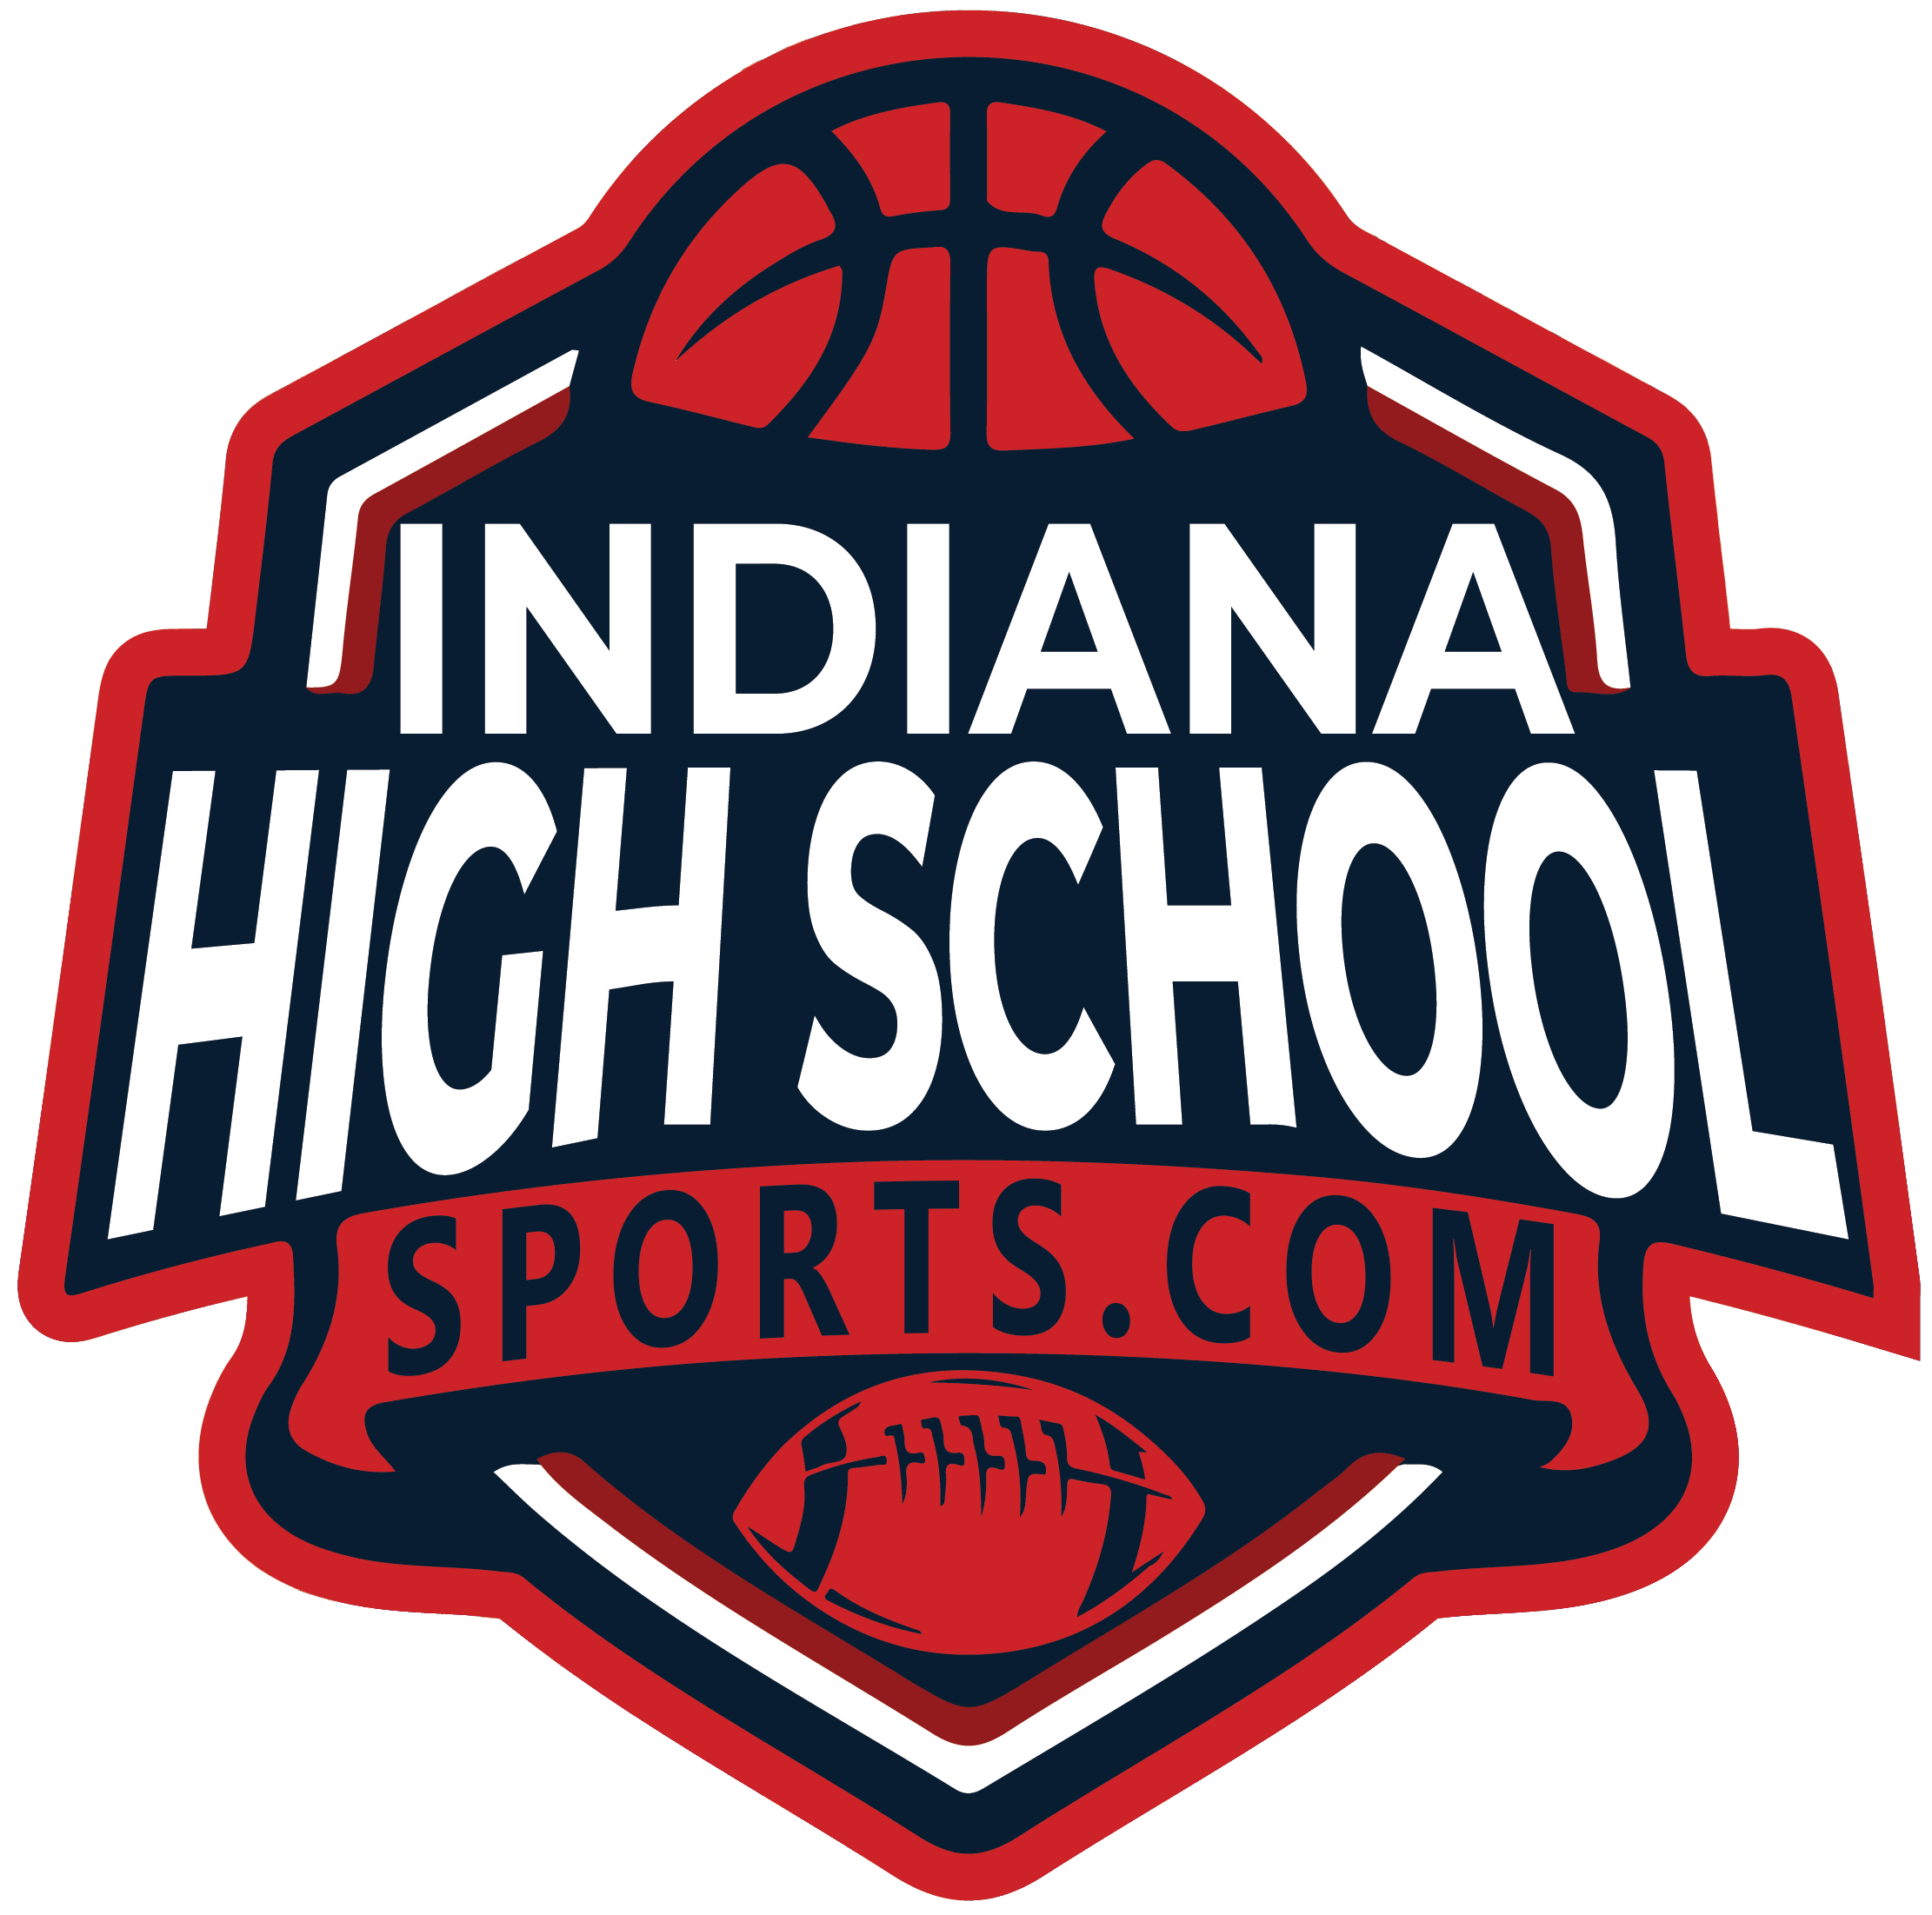 The Indiana high school sports dot com logo